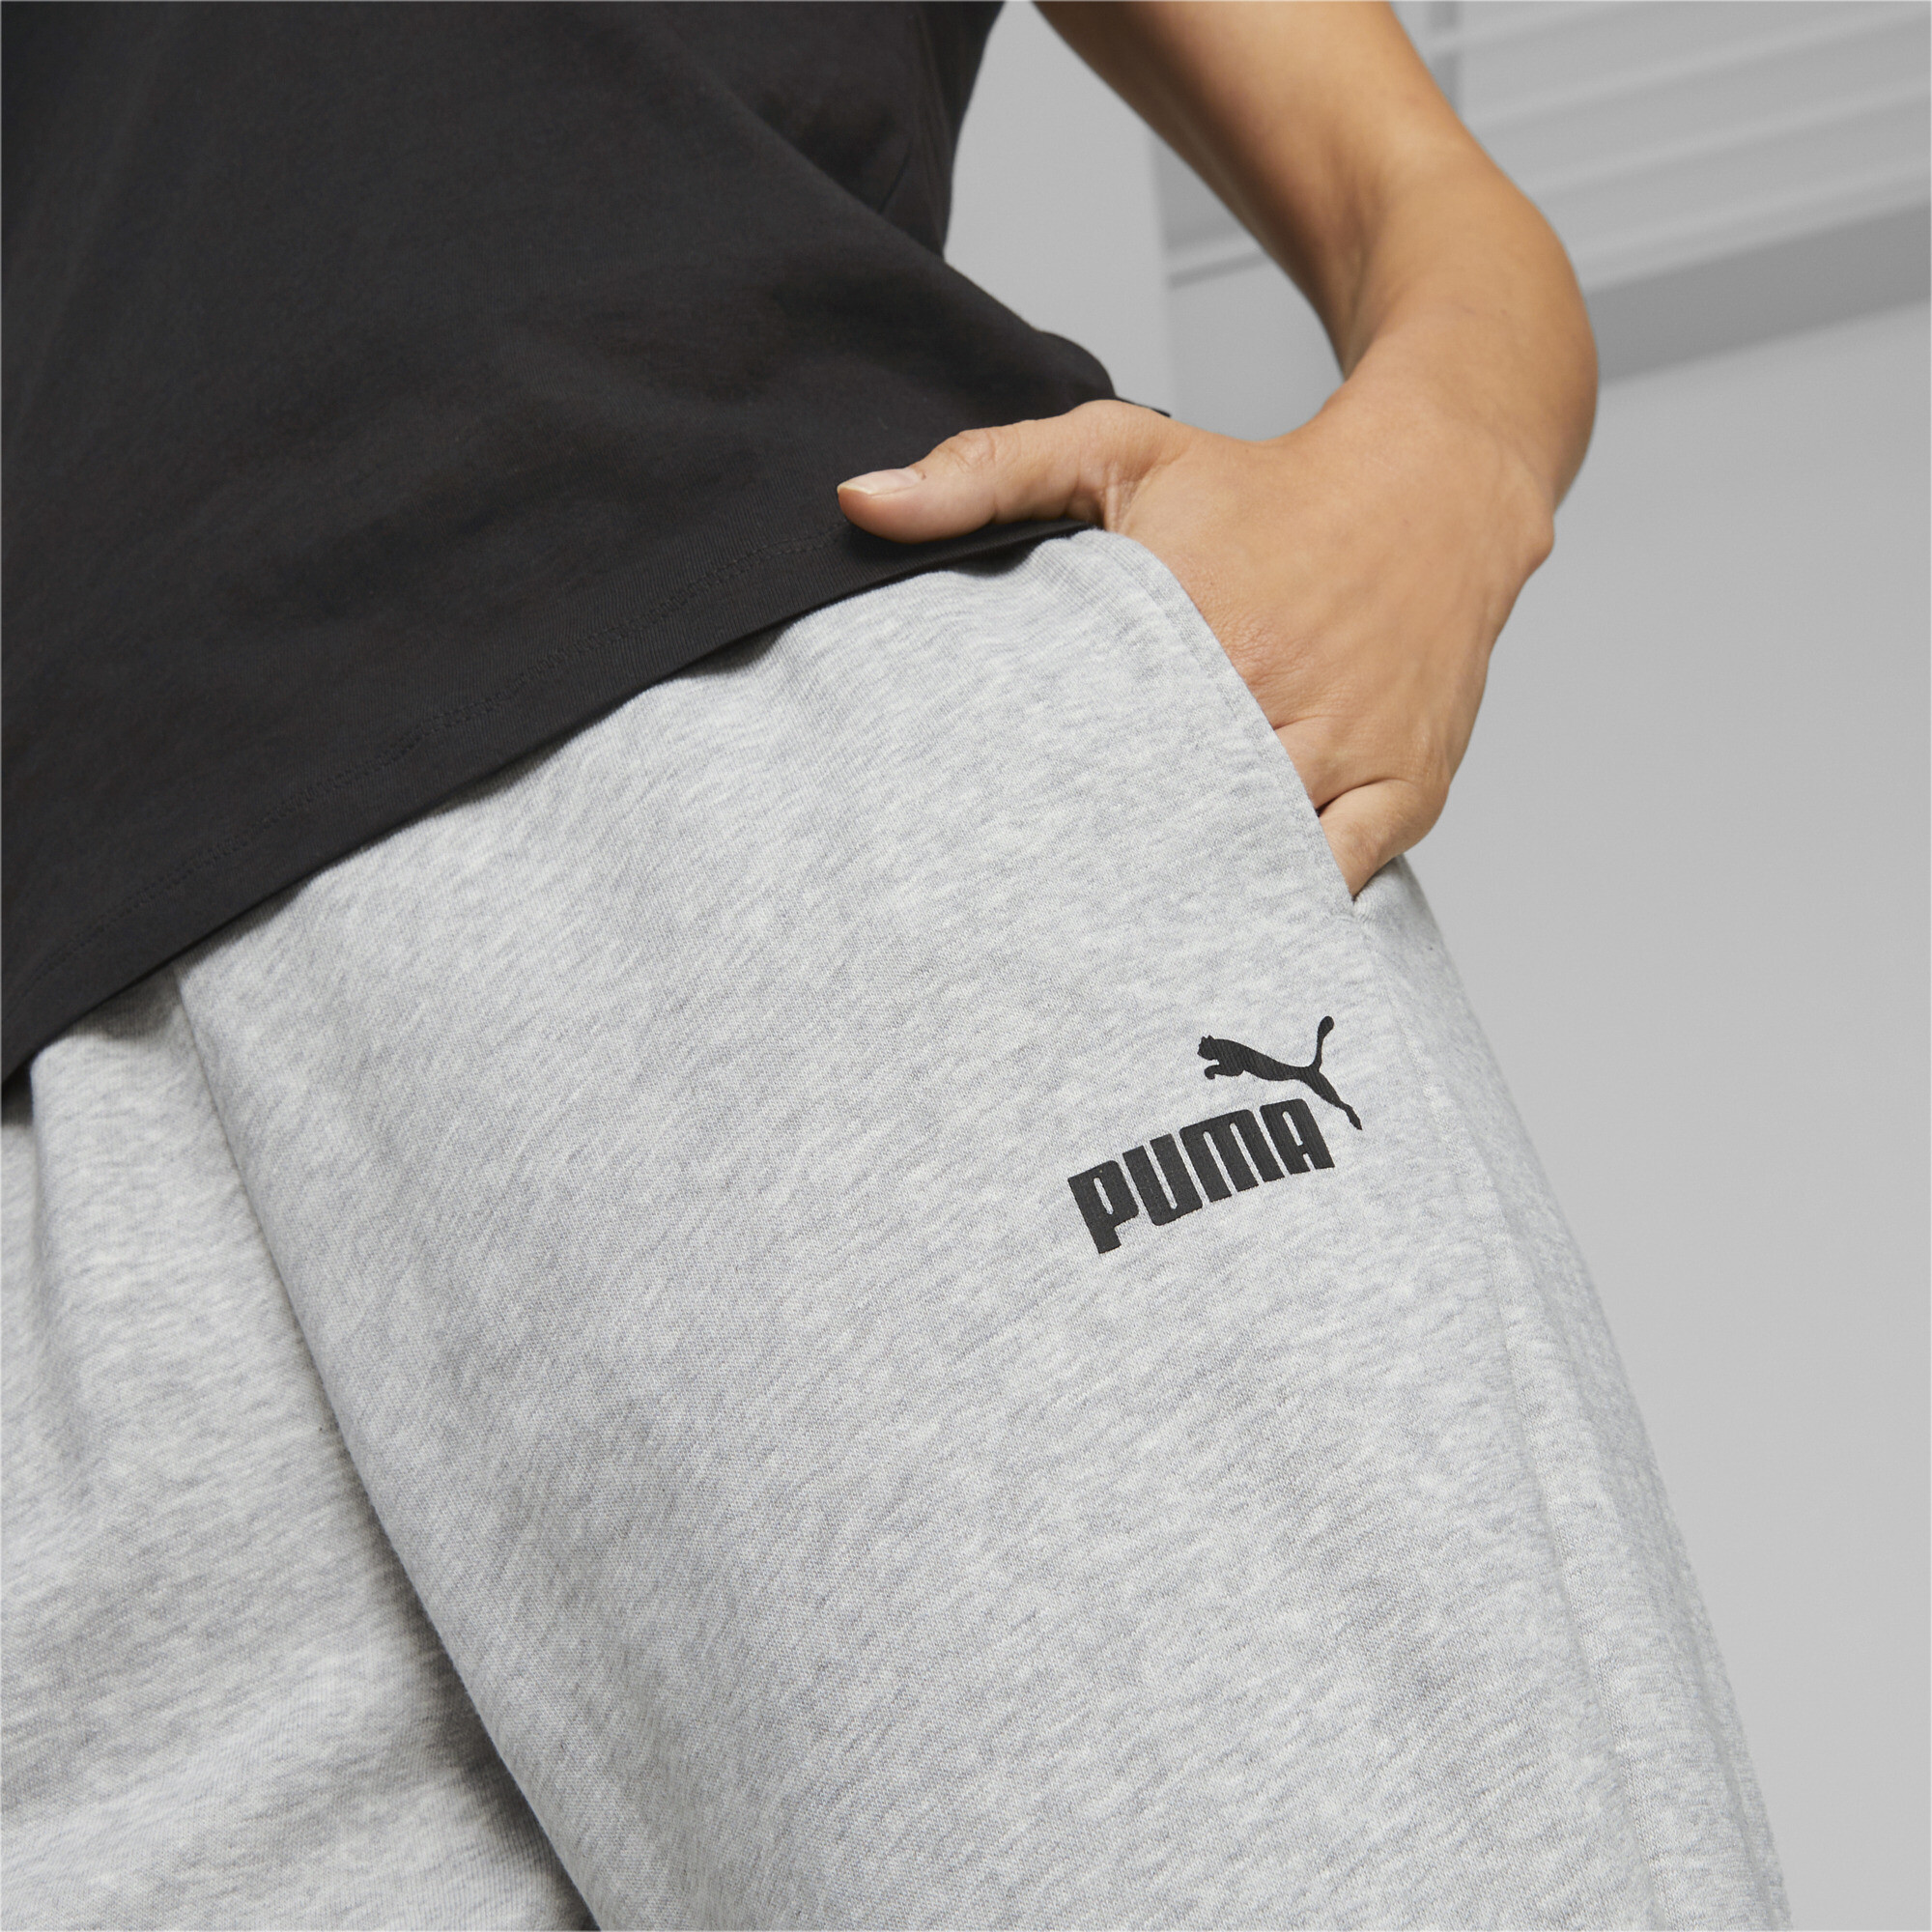 Women's Puma Essentials's Sweatpants, Gray, Size S, Clothing